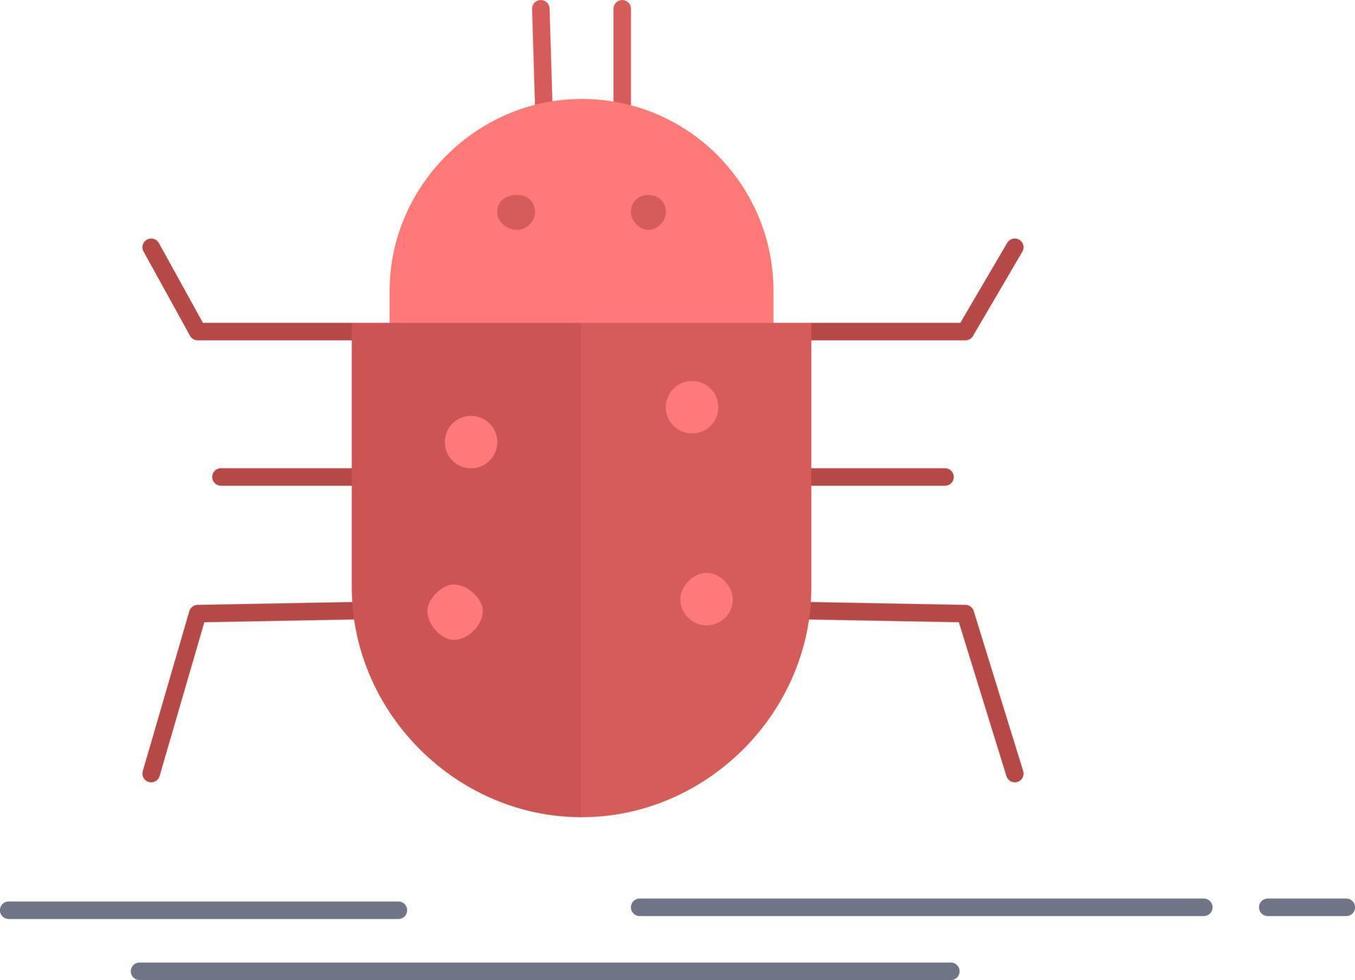 bug bugs vetor de ícone de cor plana de vírus de teste de insetos